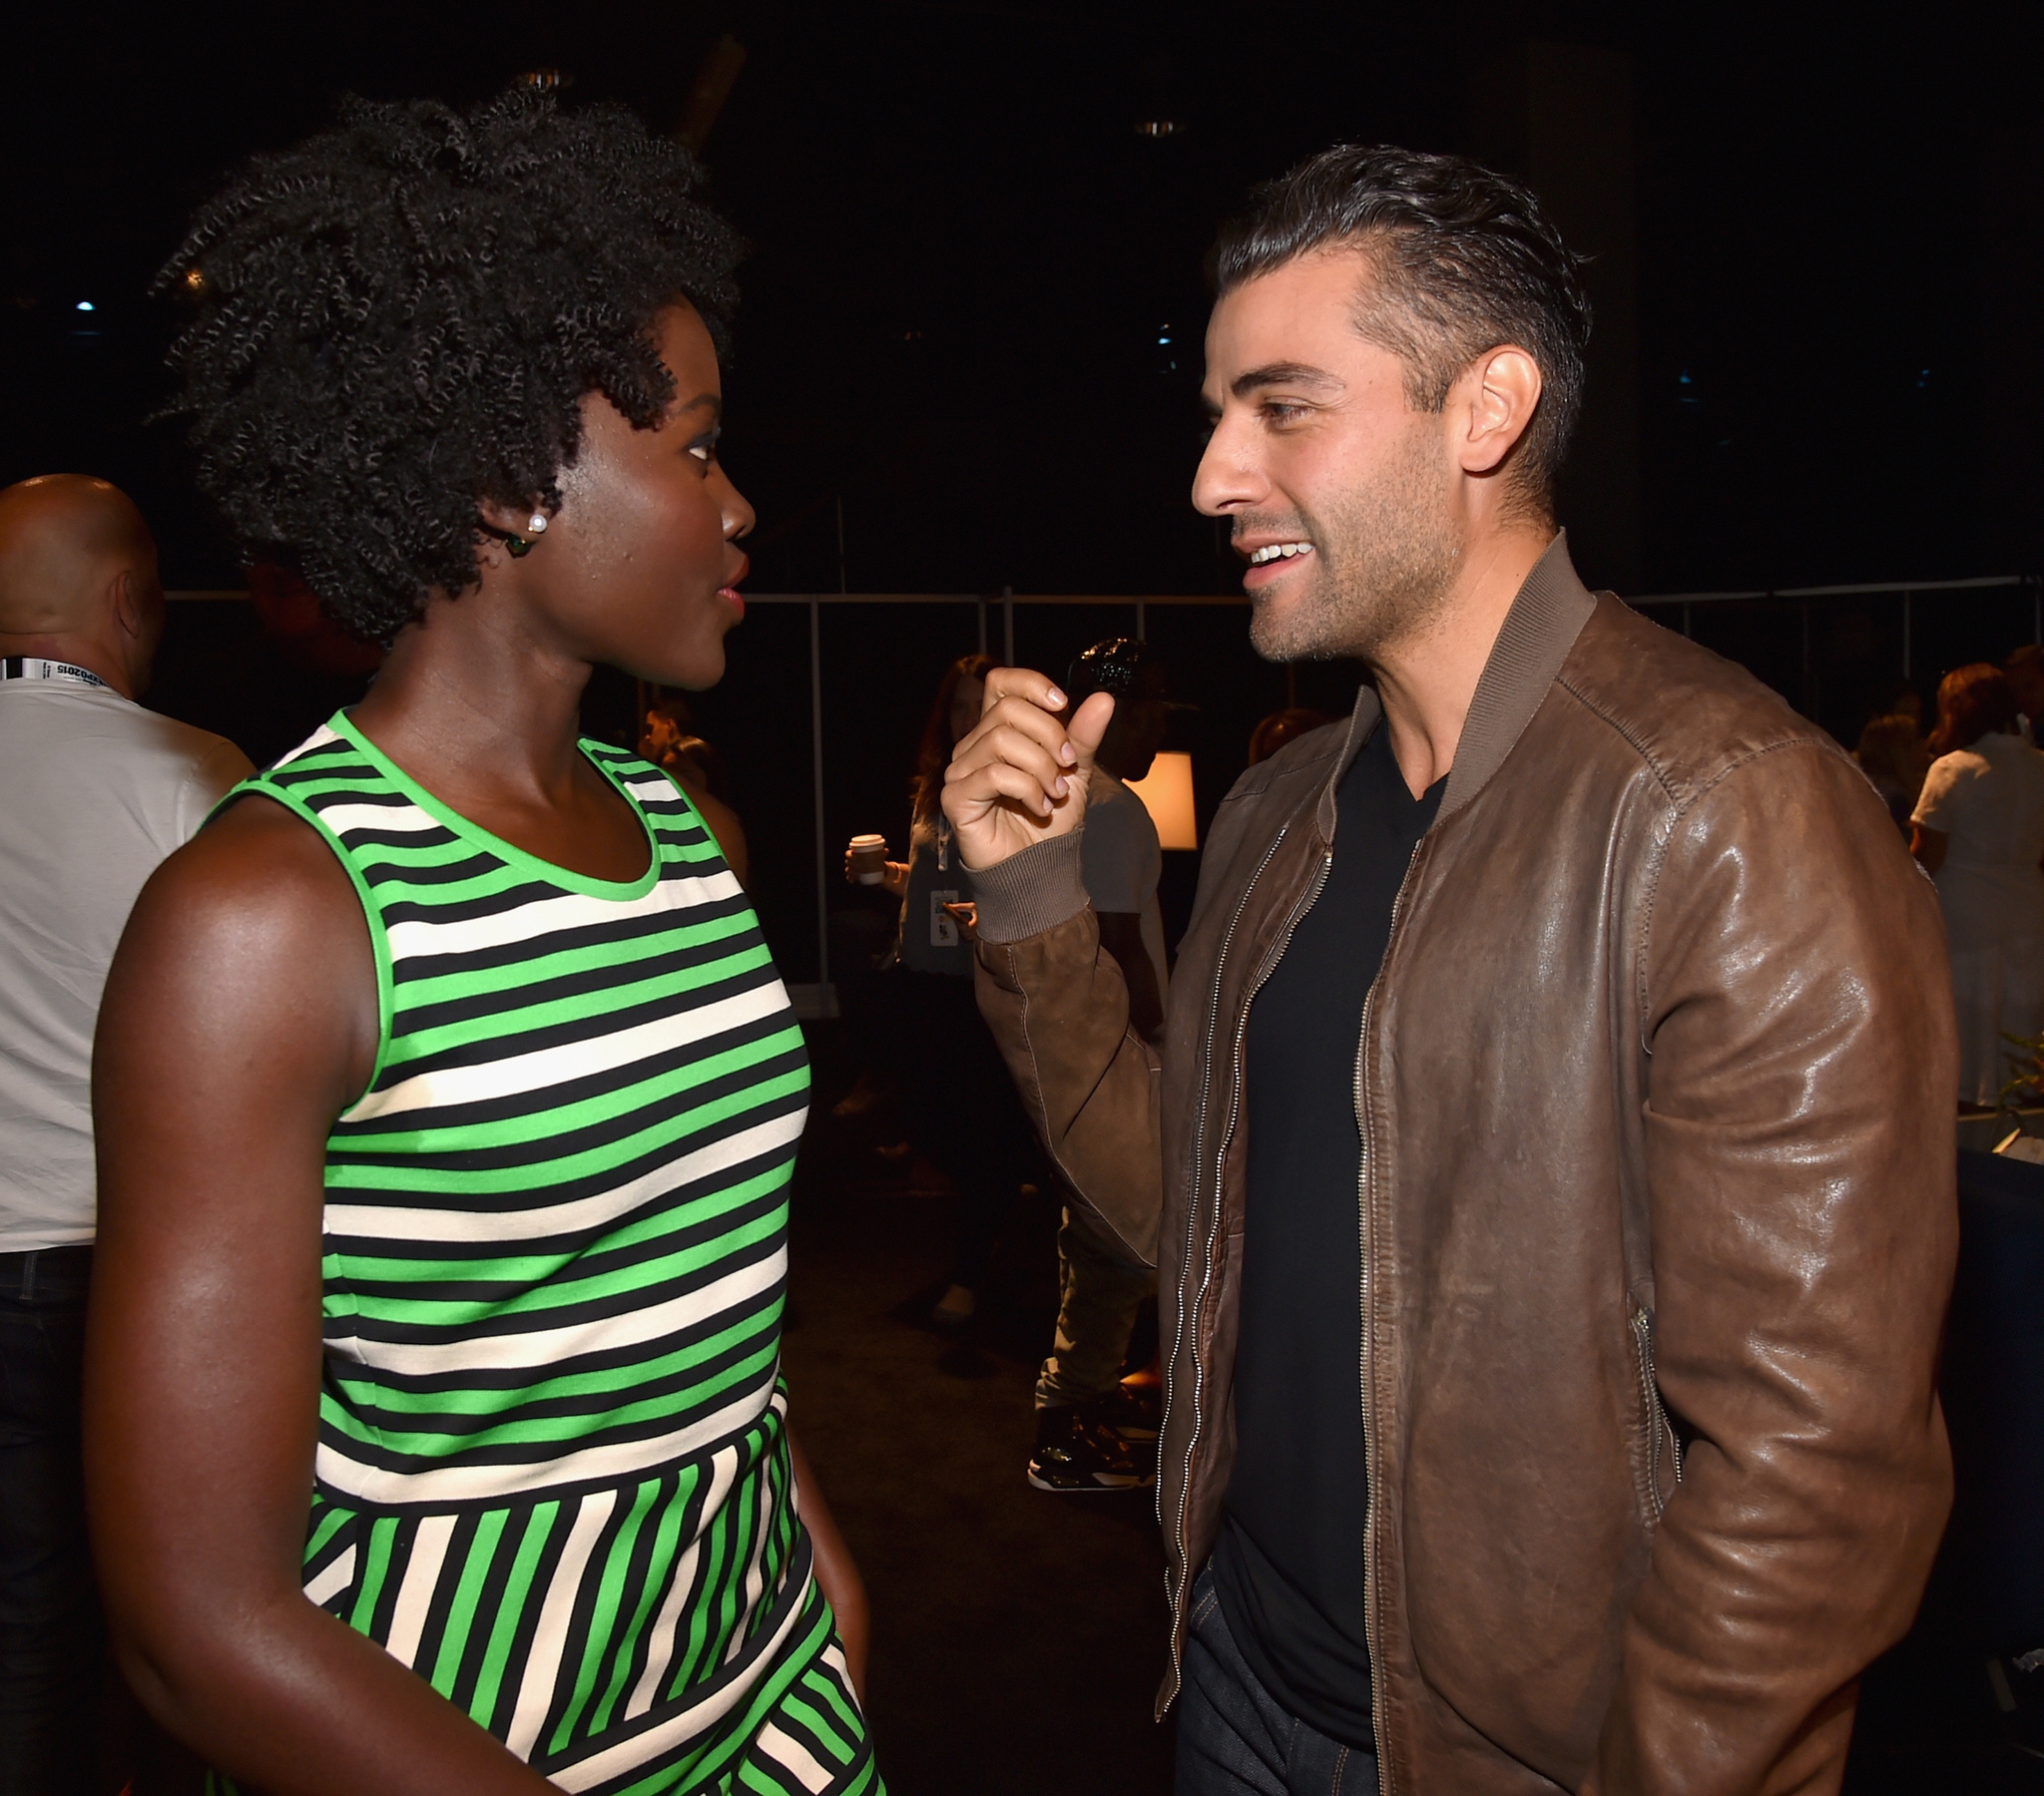 Oscar Isaac and Lupita Nyong'o at event of Zvaigzdziu karai: galia nubunda (2015)